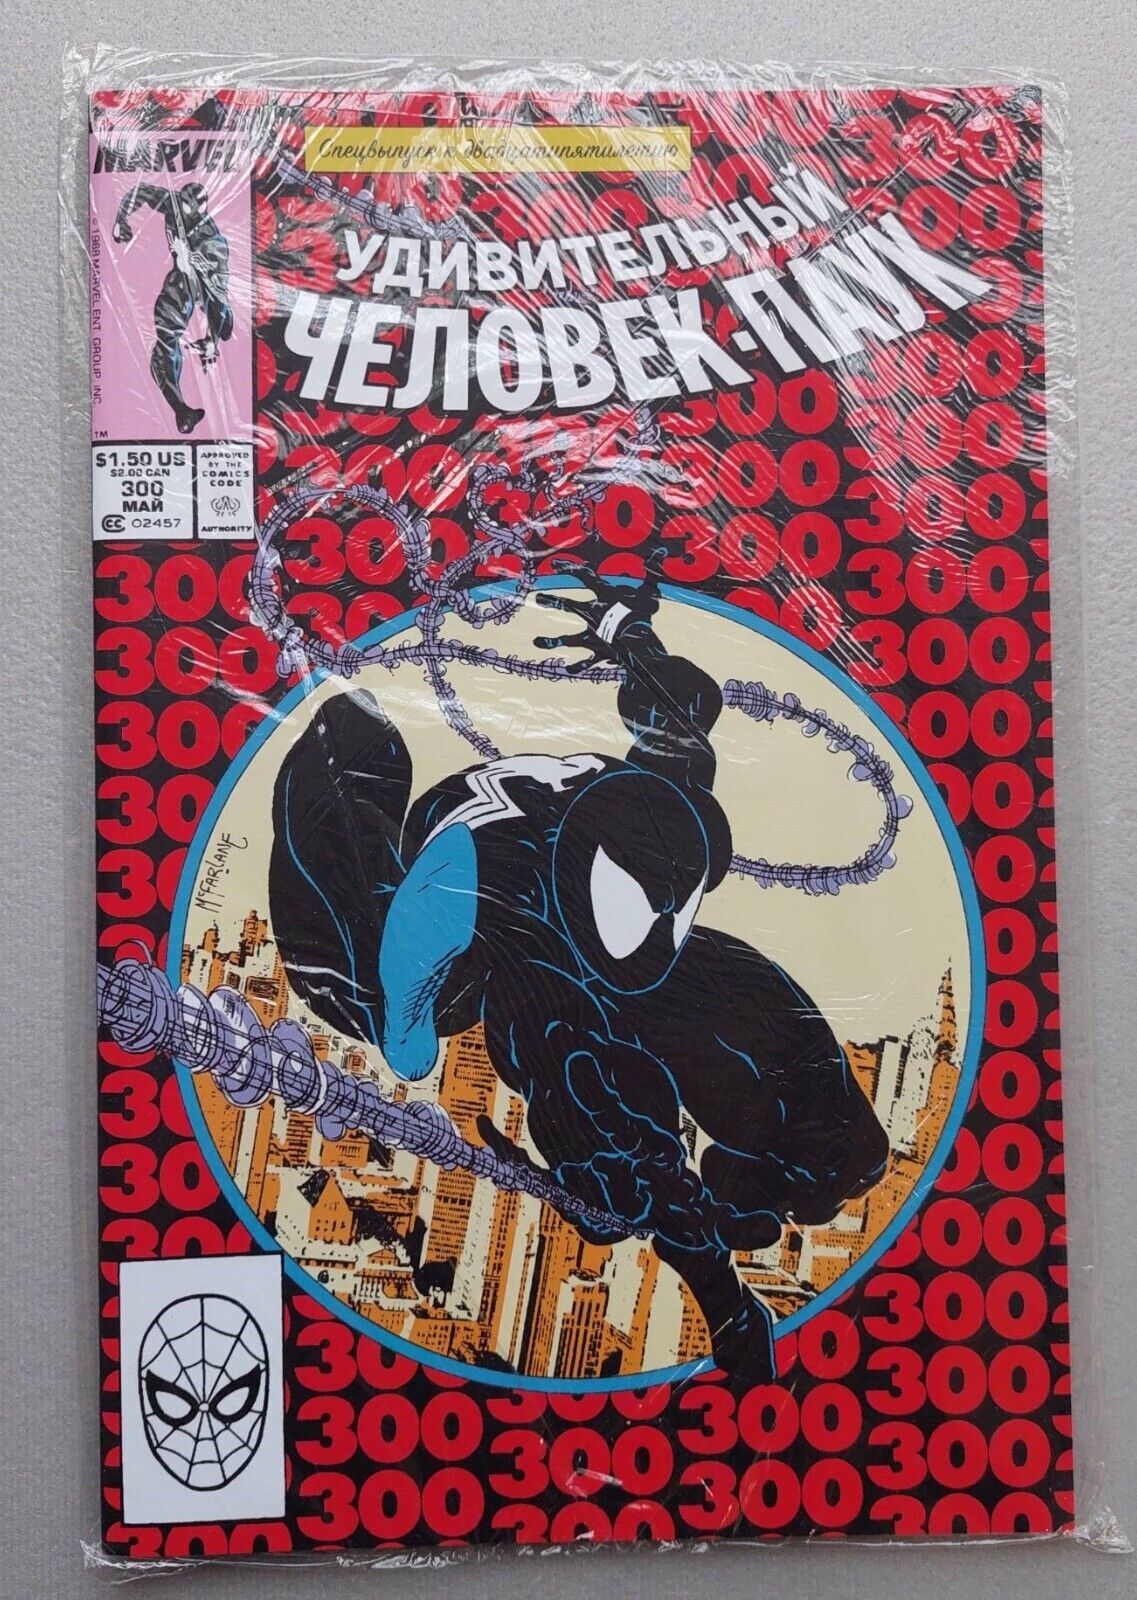 Amazing Spider-Man #300 First appearance of Venom Человек-Паук Marvel (Russian)